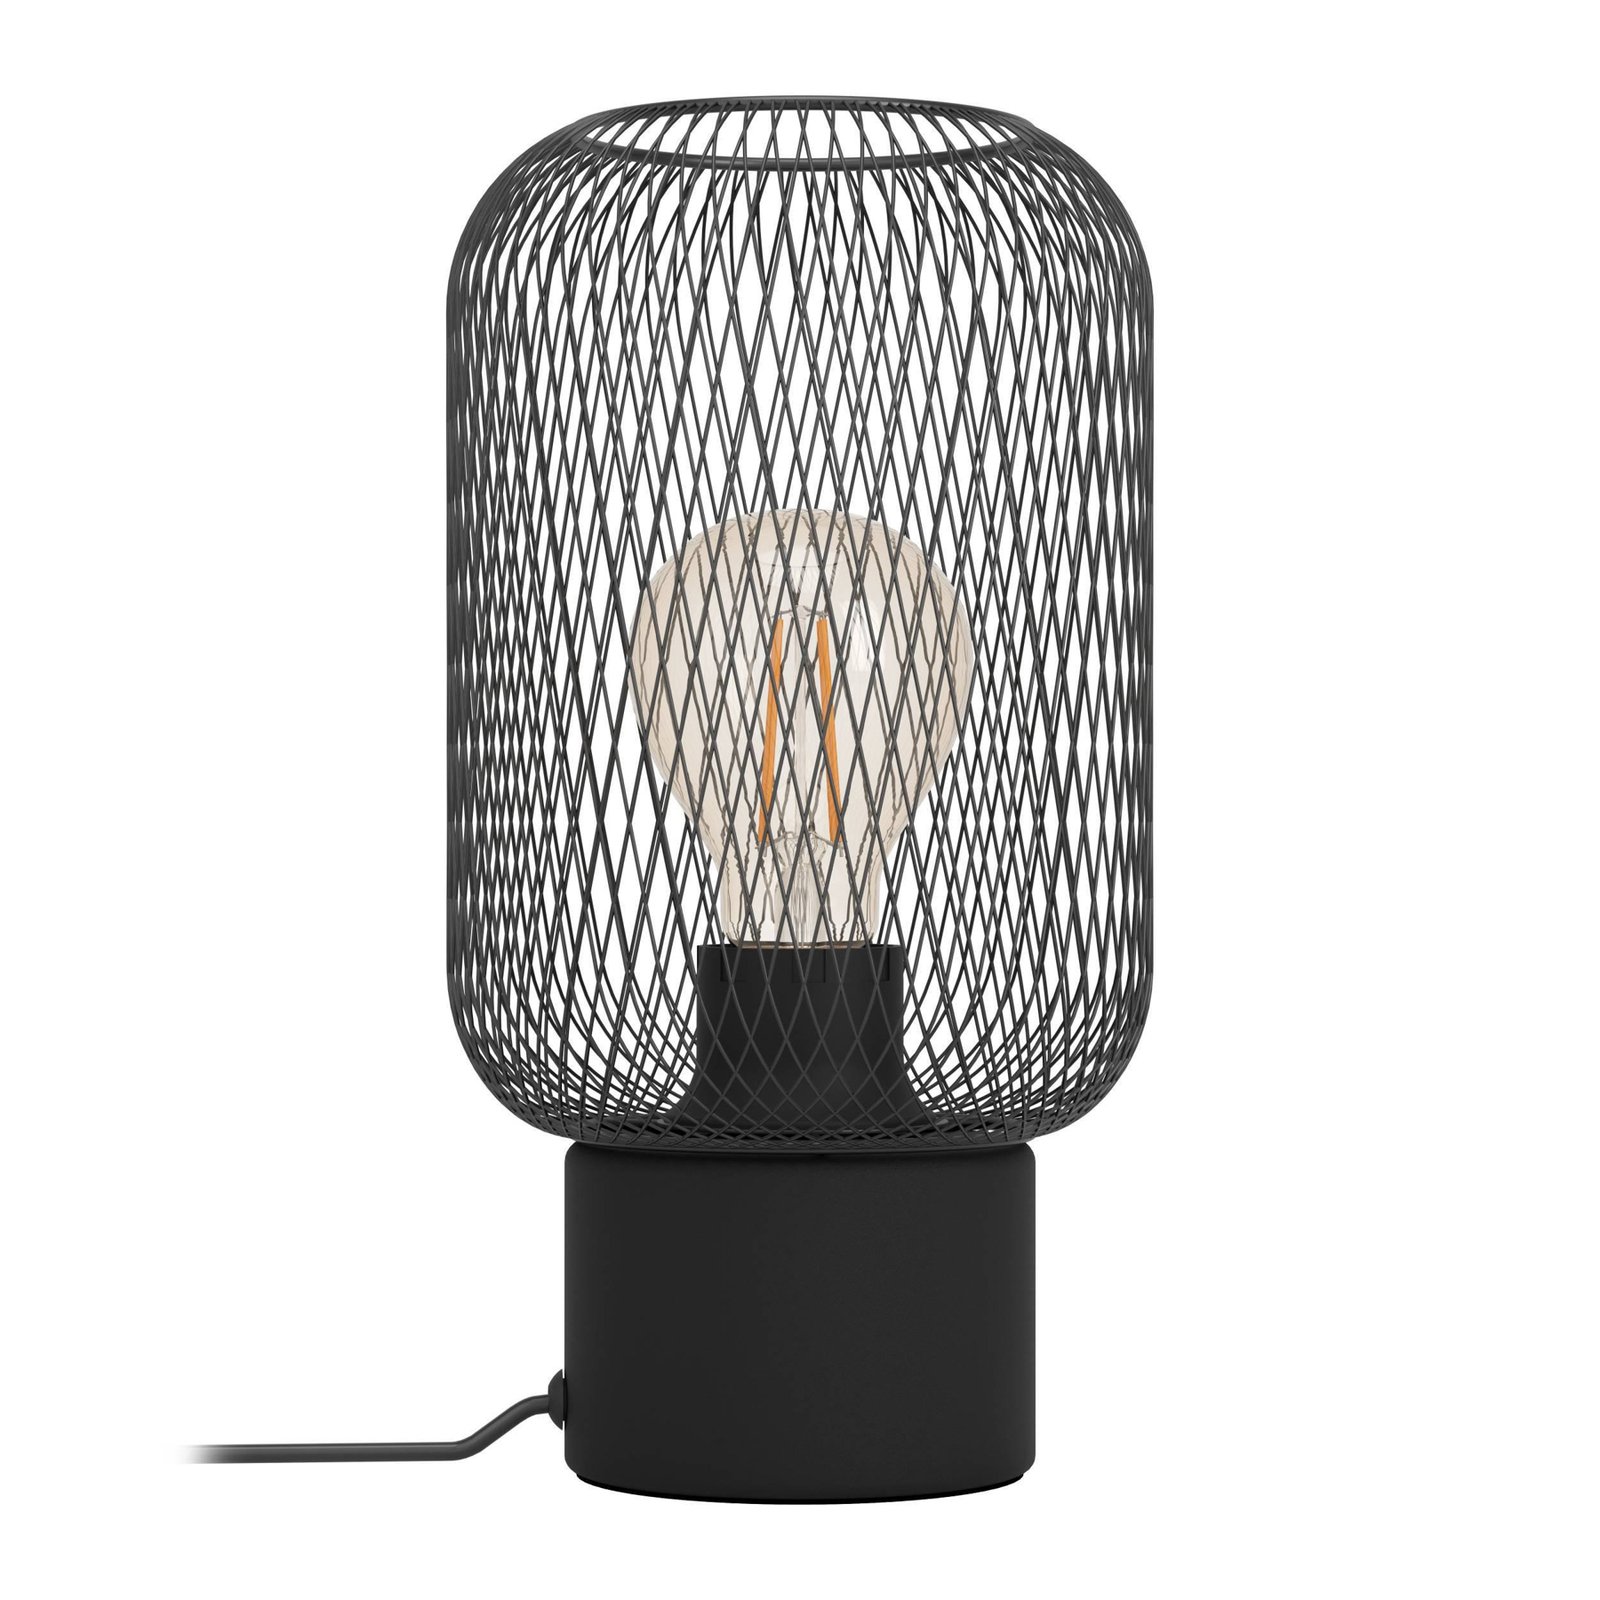 Wrington tafellamp, hoogte 28,5 cm, zwart, staal